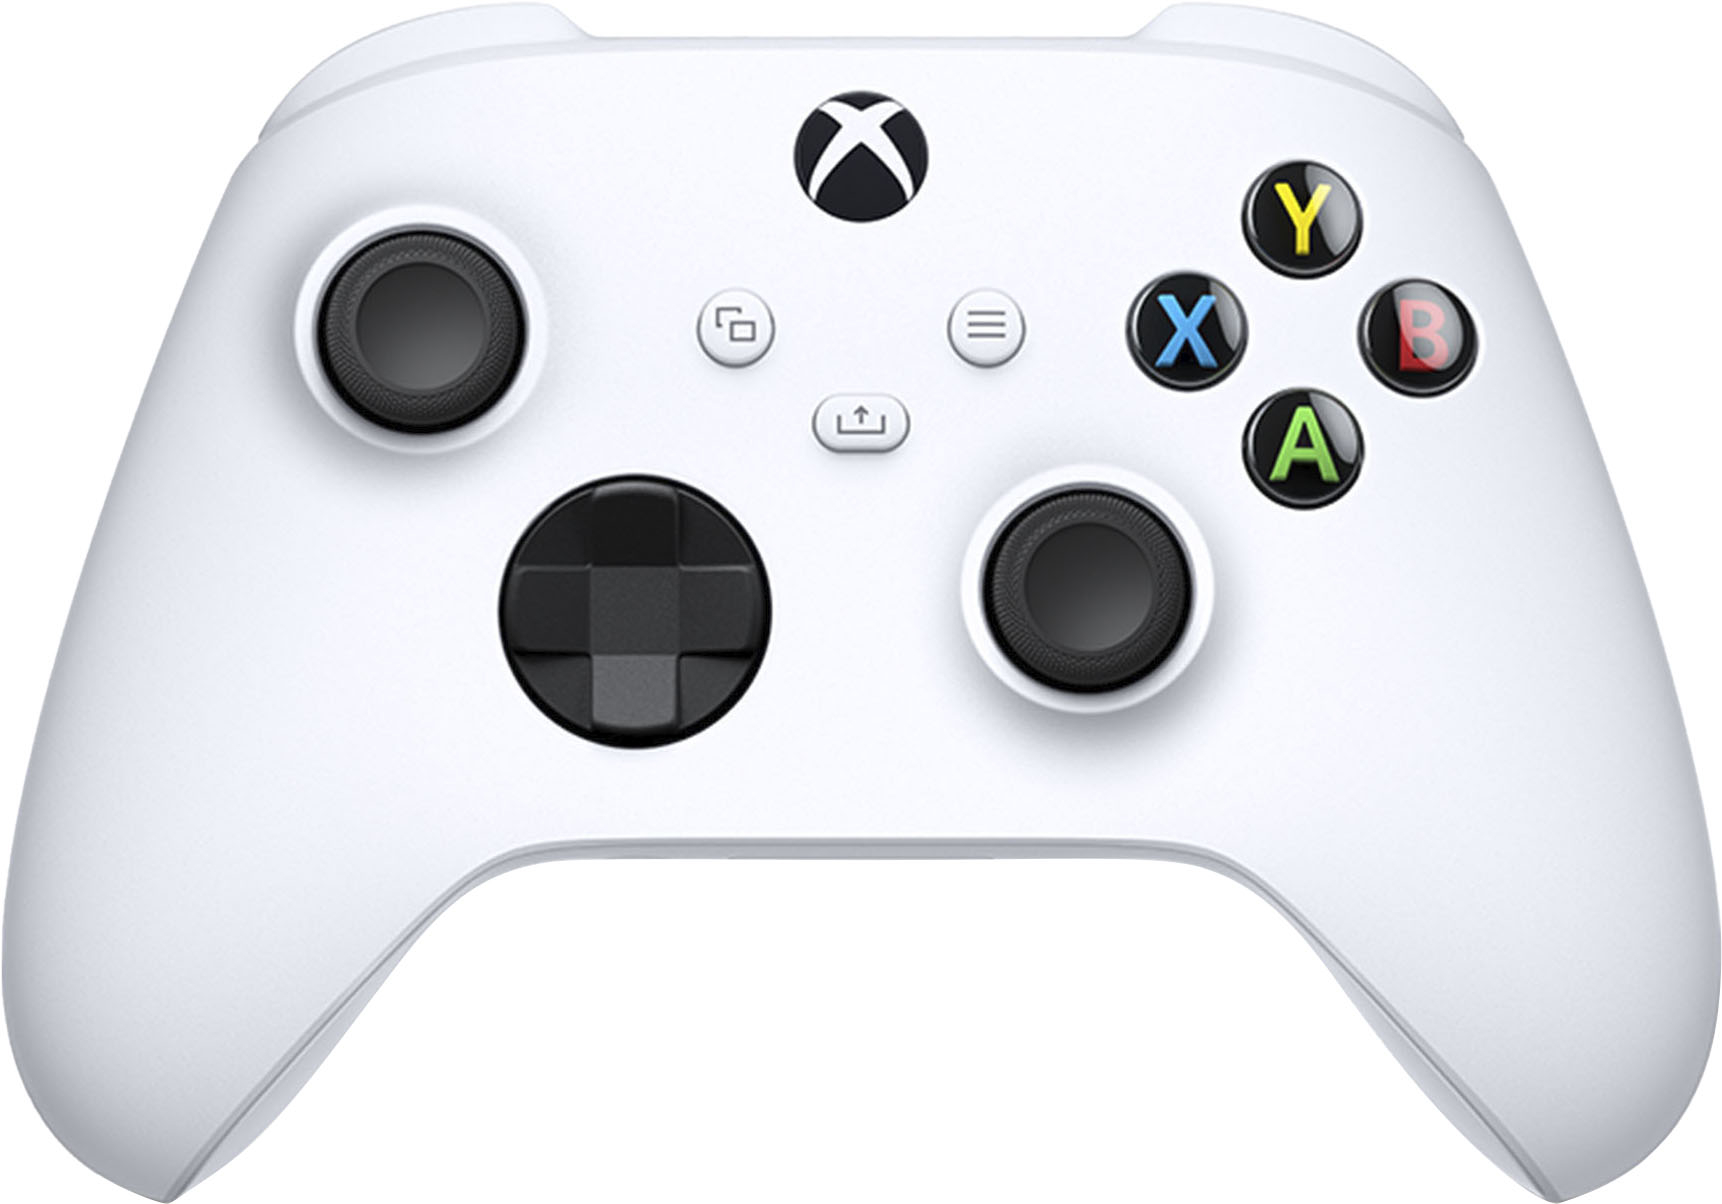 Console Microsoft Xbox Series s Digital Edition 512GB / Jogos